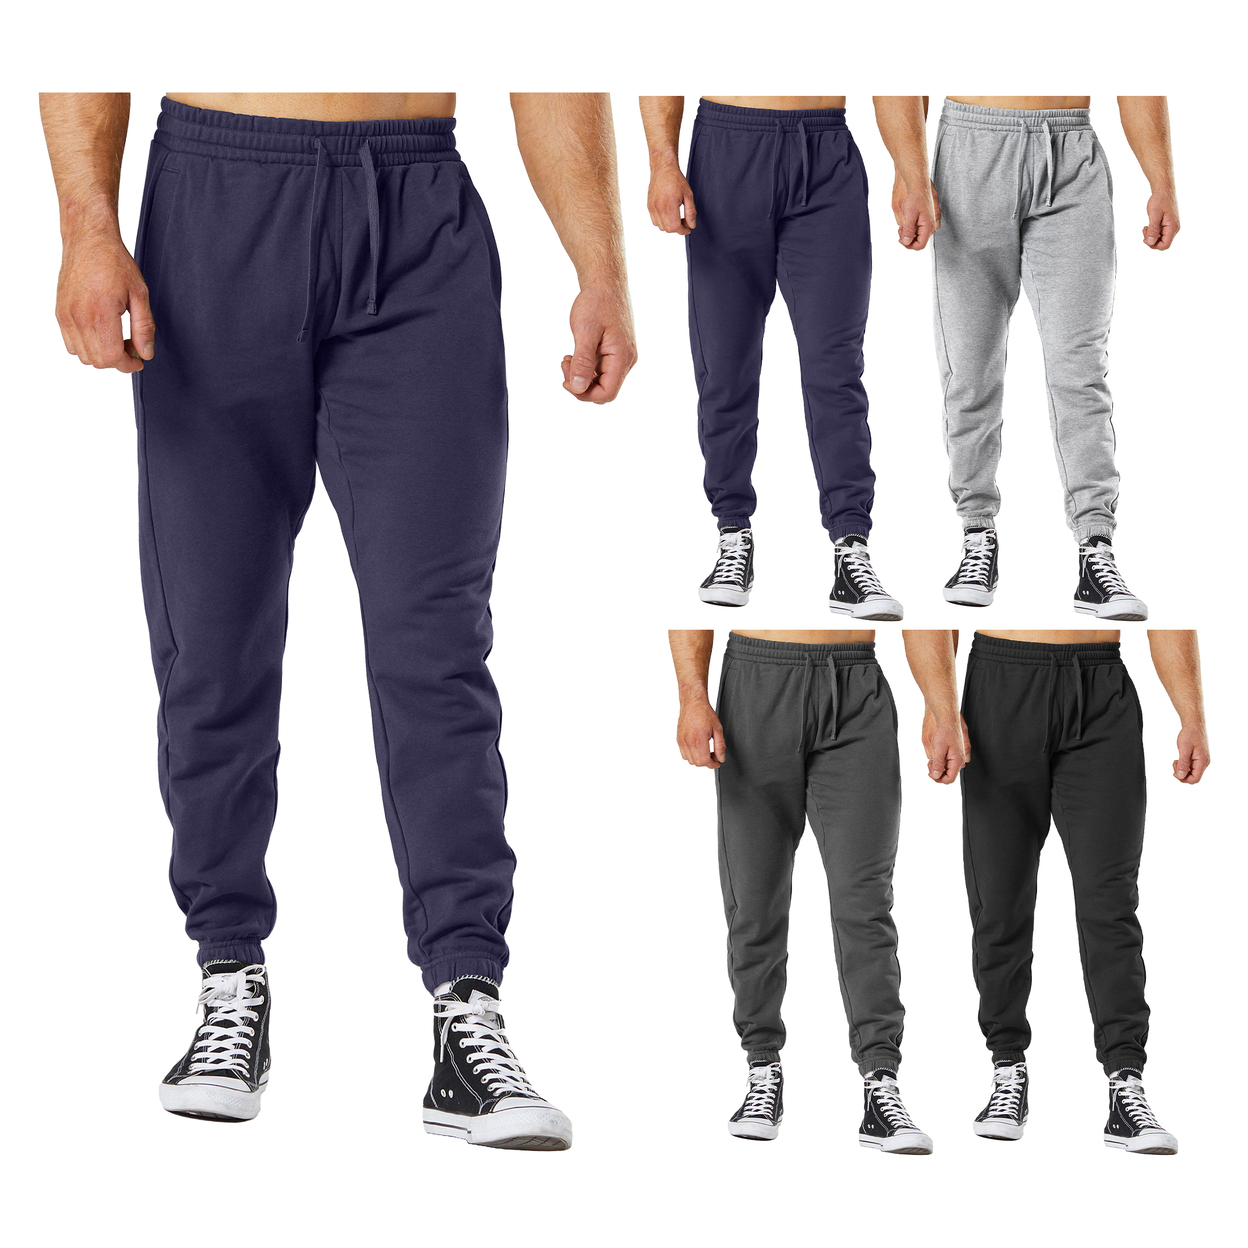 2-Pack: Men's Ultra-Soft Cozy Winter Warm Casual Fleece-Lined Sweatpants Jogger - Black & Navy, Large